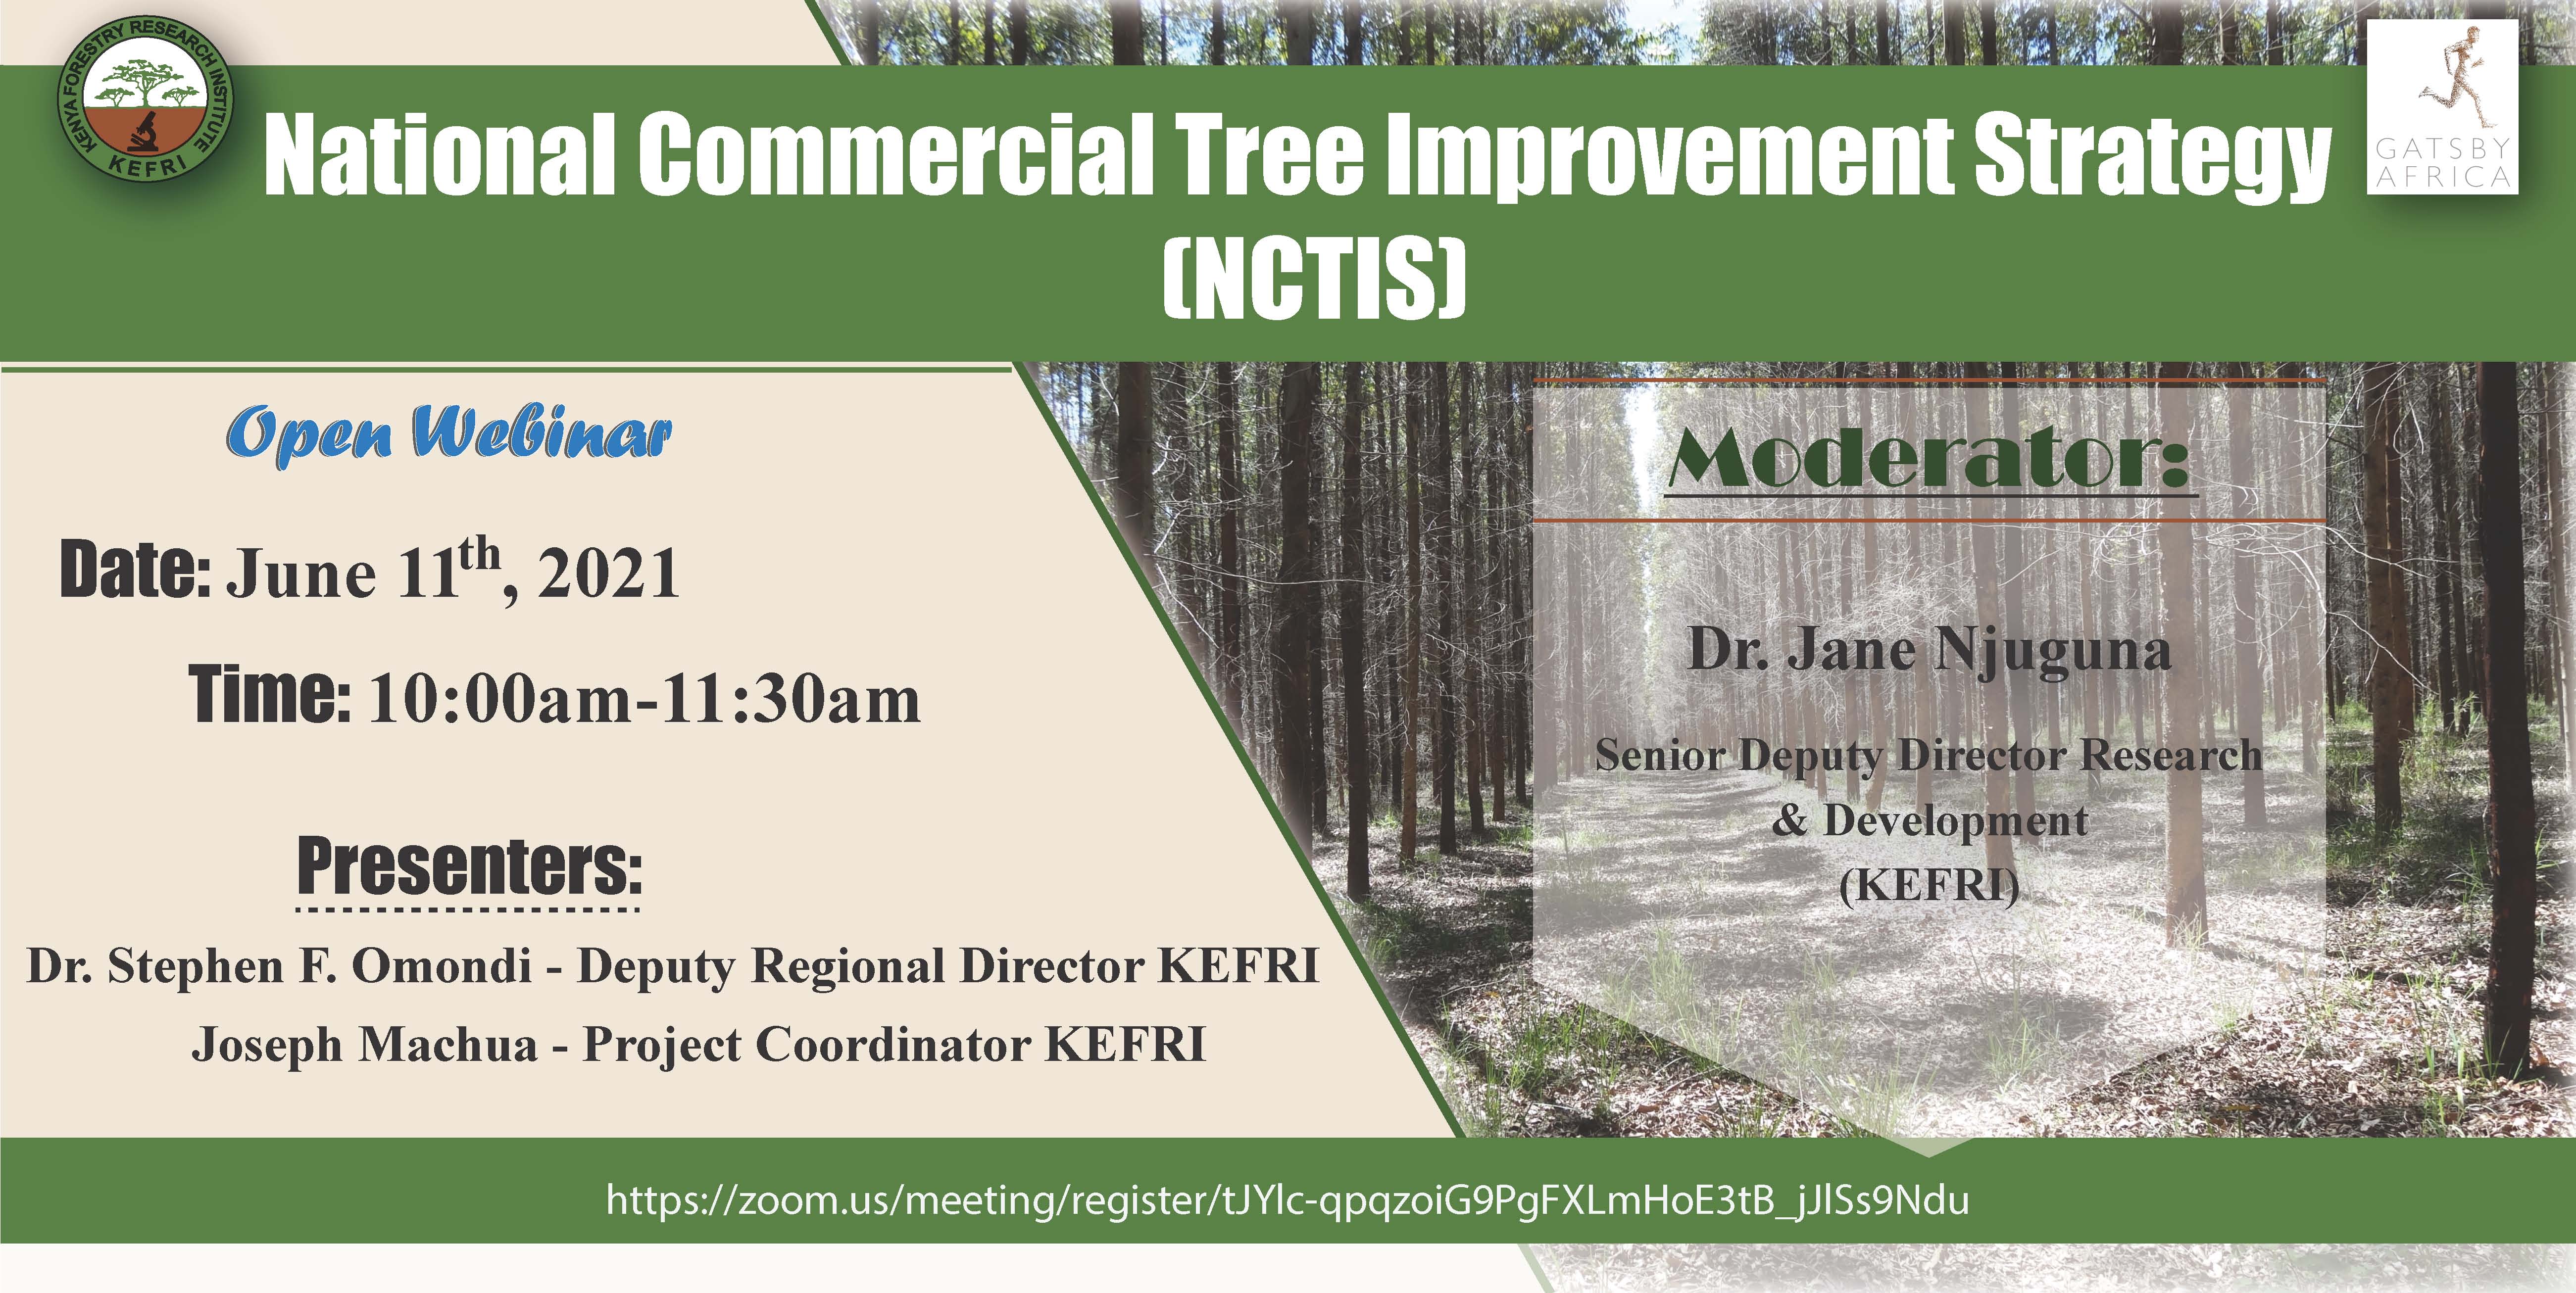 Stakeholder Webinar on National Commercial Tree Improvement Strategy